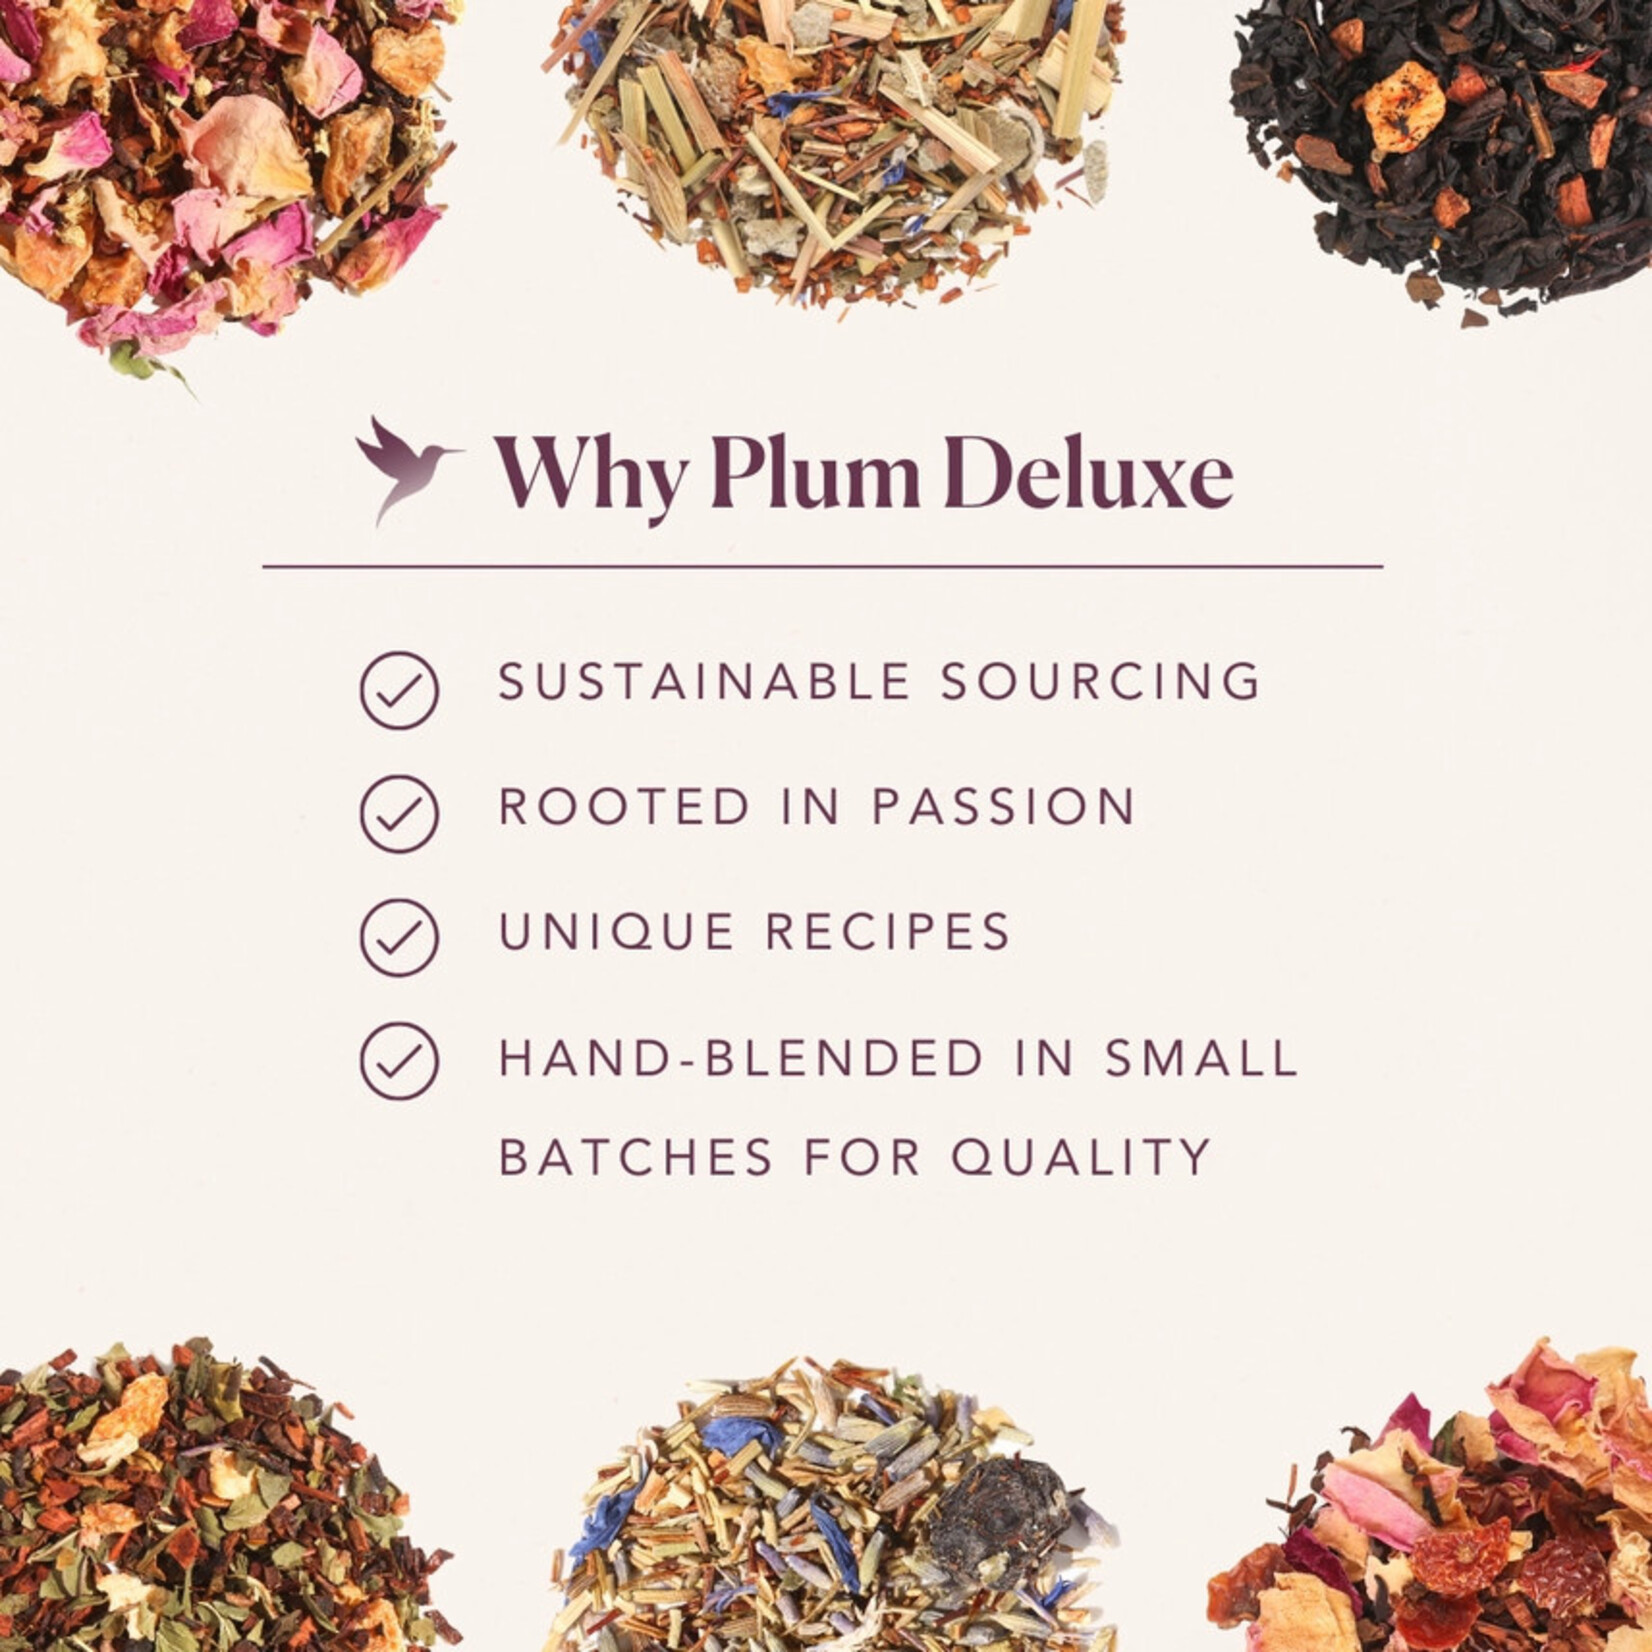 Plum Deluxe Tea Self Care Herbal Tea